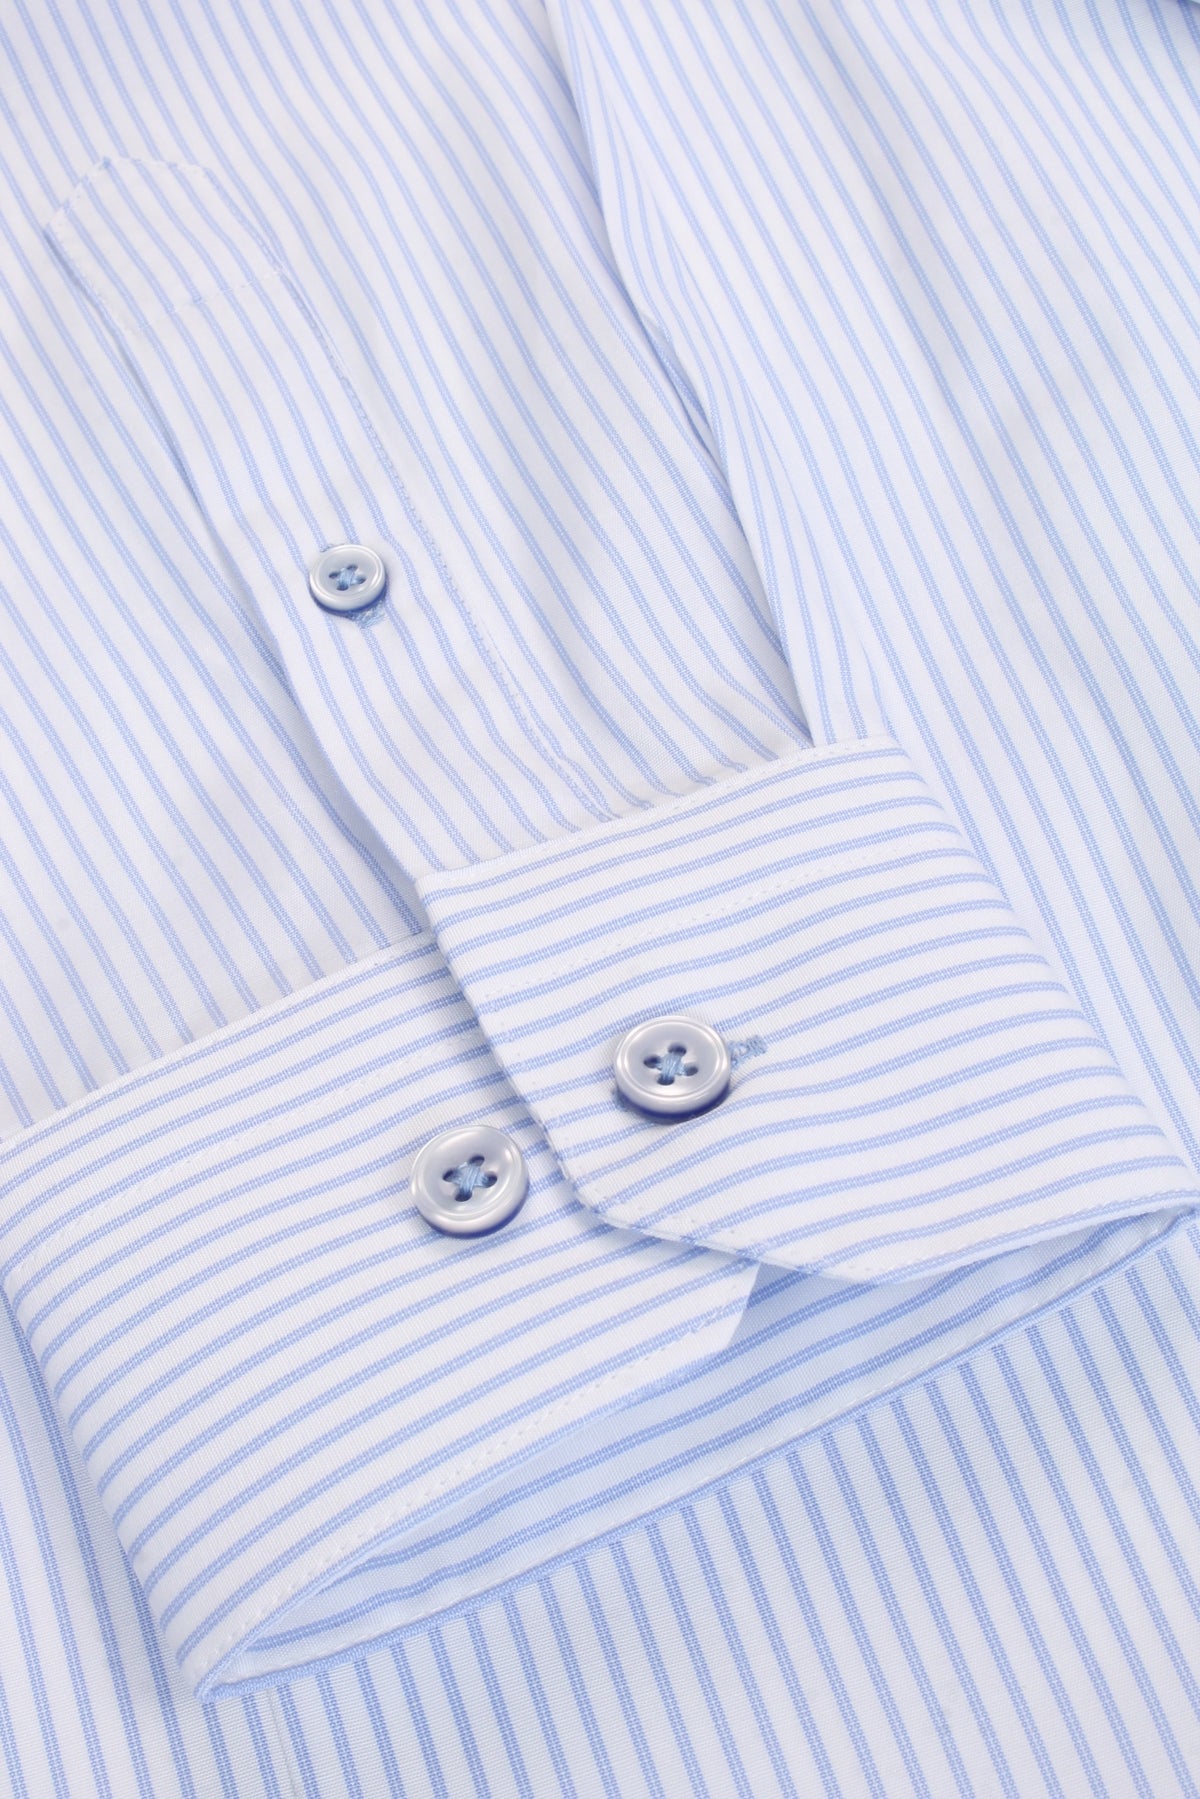 Xact Mens Stripe Grandad Shirt - Long Sleeved, 05, Xsh1078, Light Blue Stripe